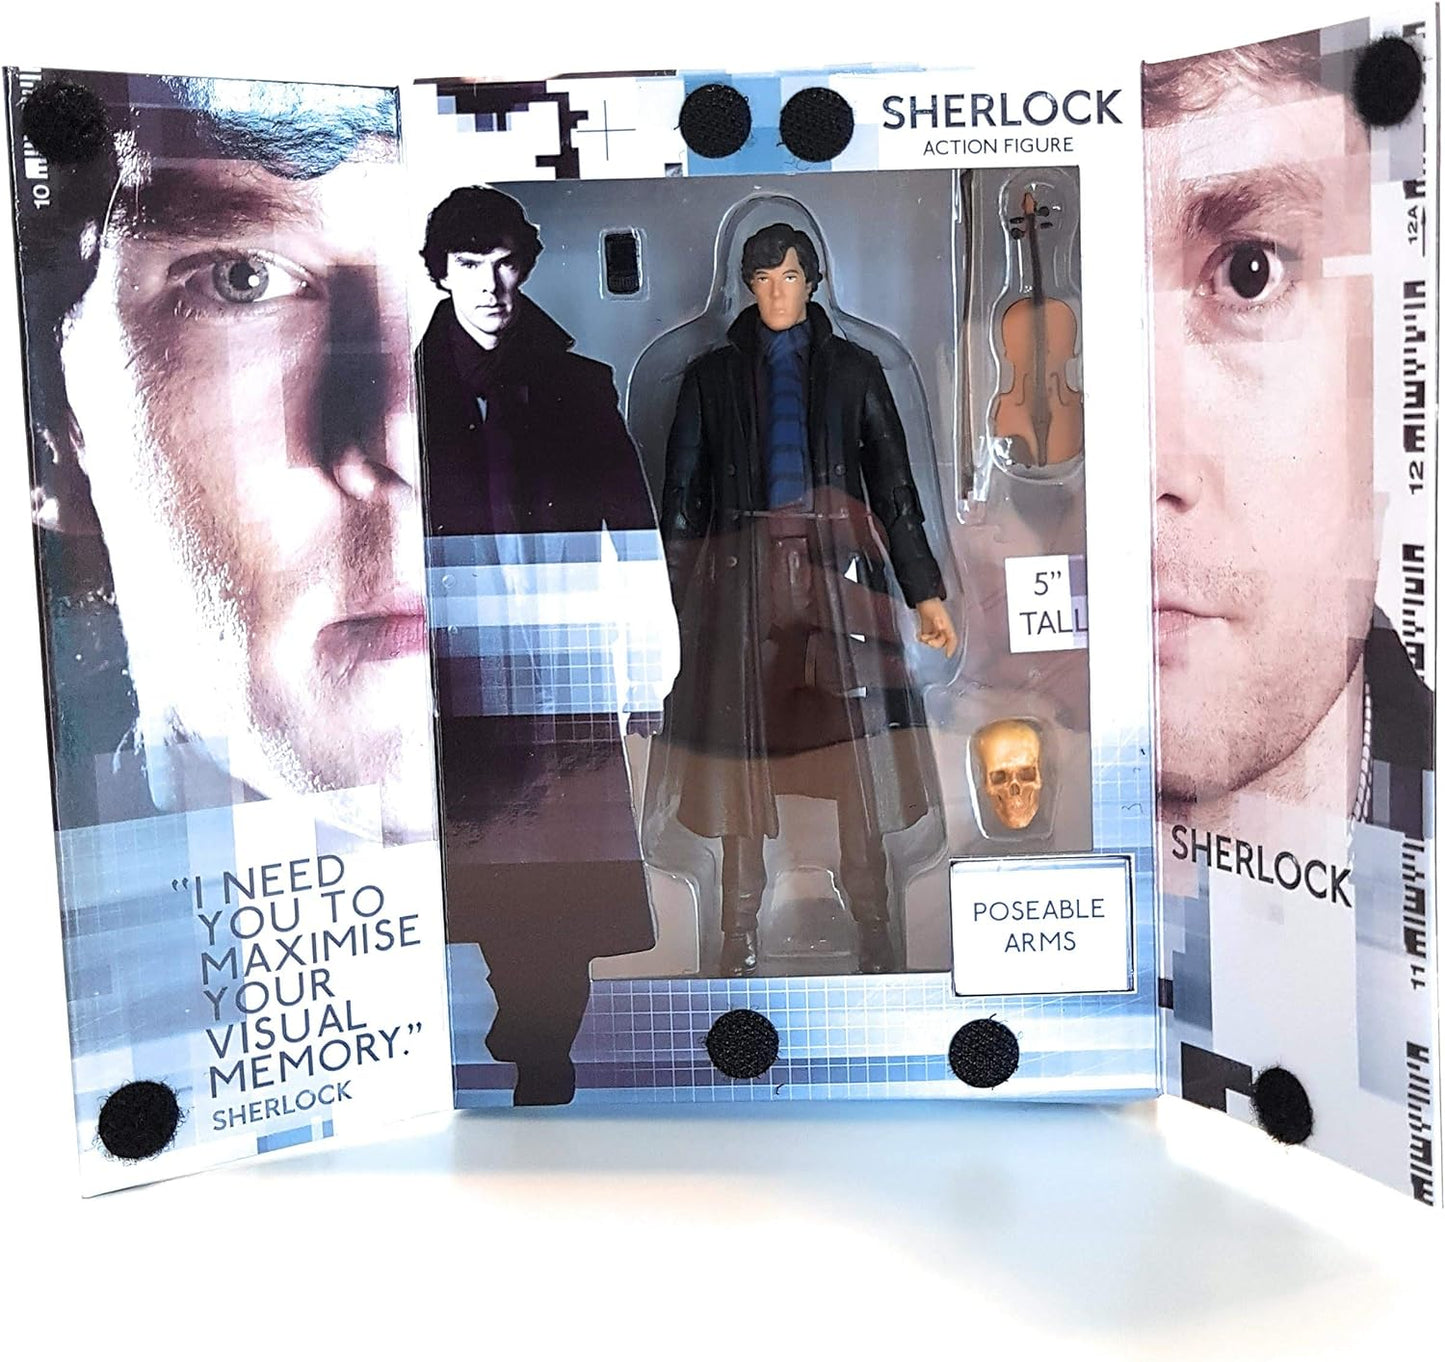 Sherlock 5-Inch Scale Action Figure